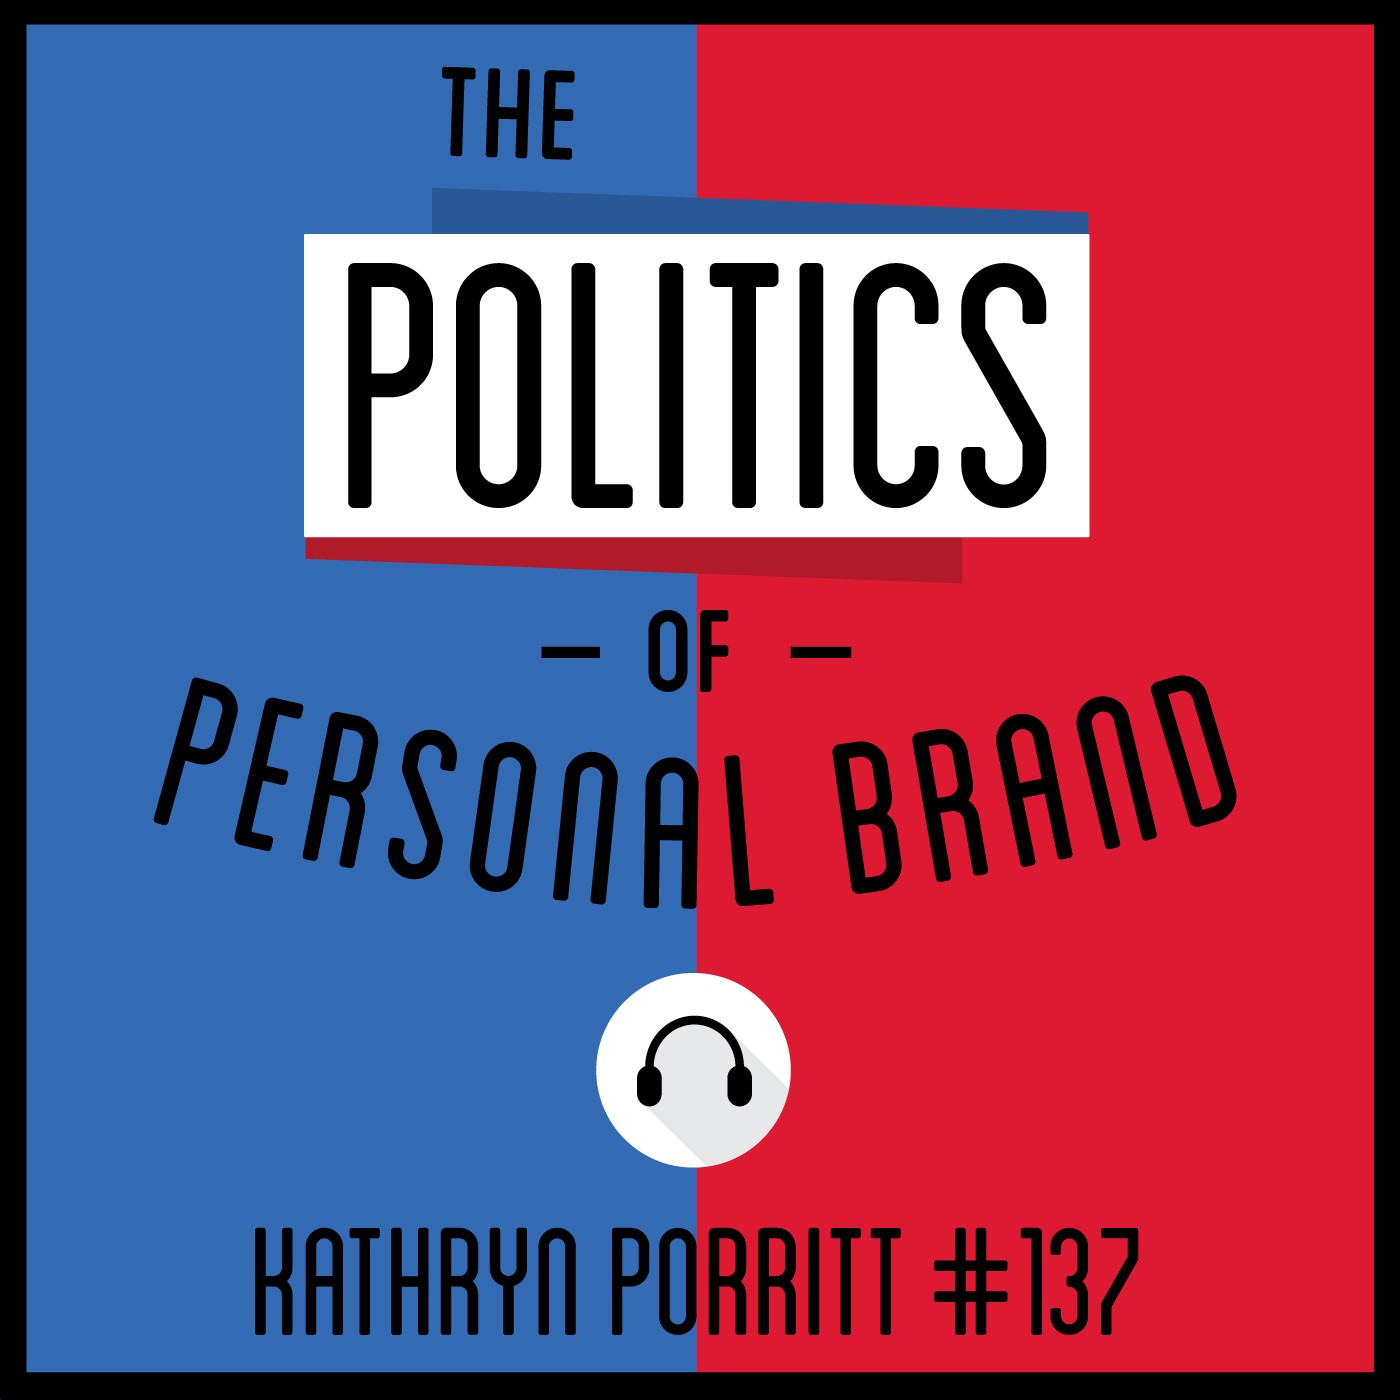 137: The Politics of Personal Brand - Kathryn Porritt